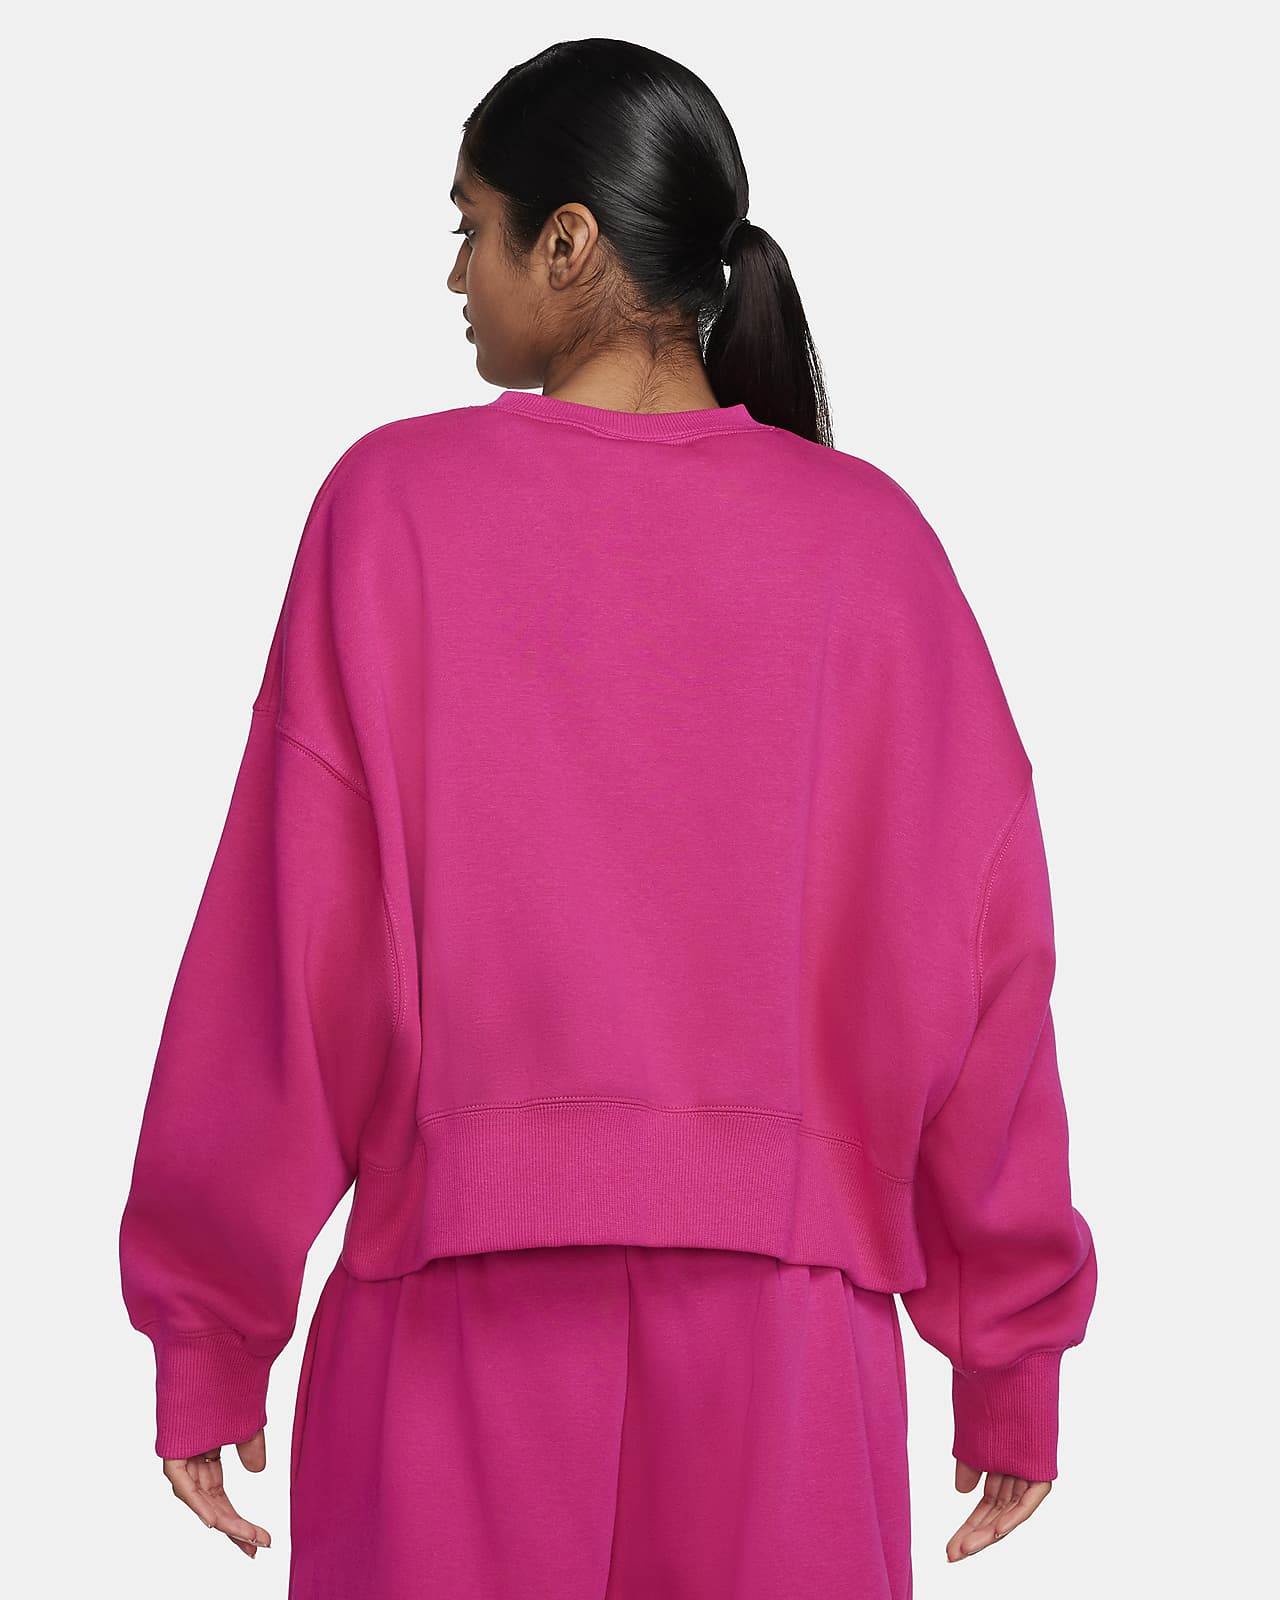 Sweatshirt de gola redonda extremamente folgada Nike Sportswear Phoenix  Fleece para mulher